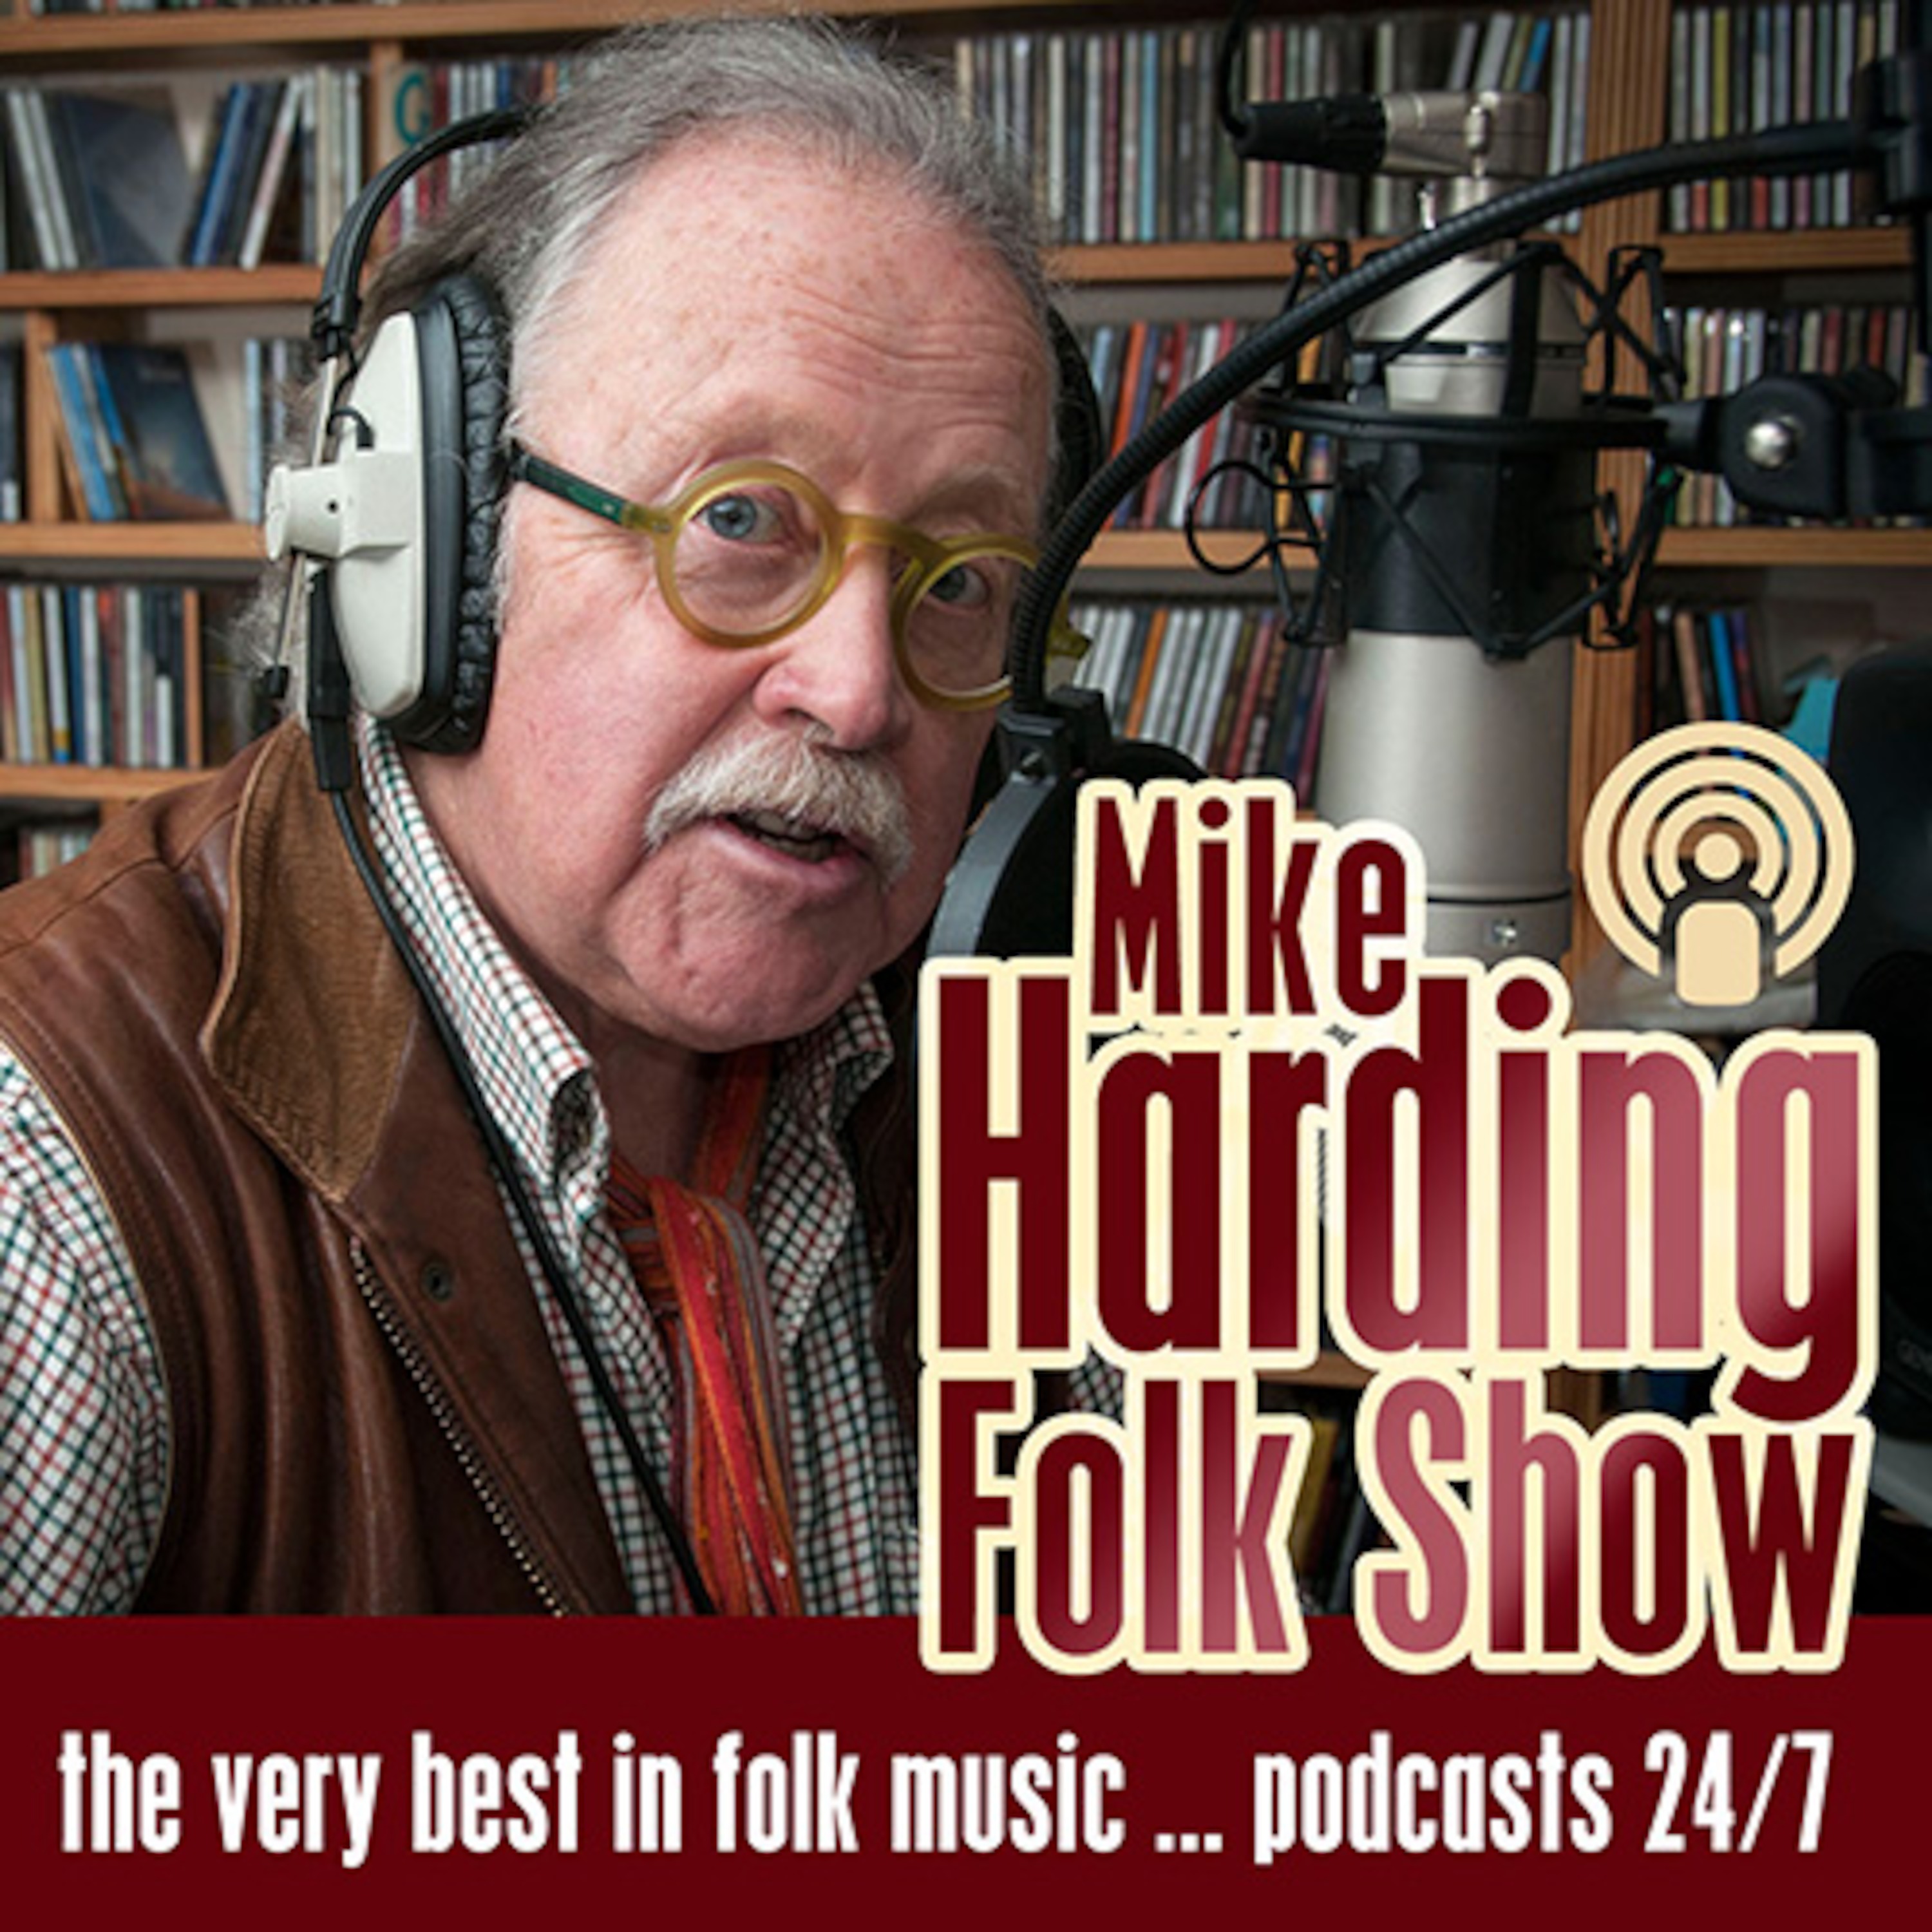 Mike Harding Folk Show 88